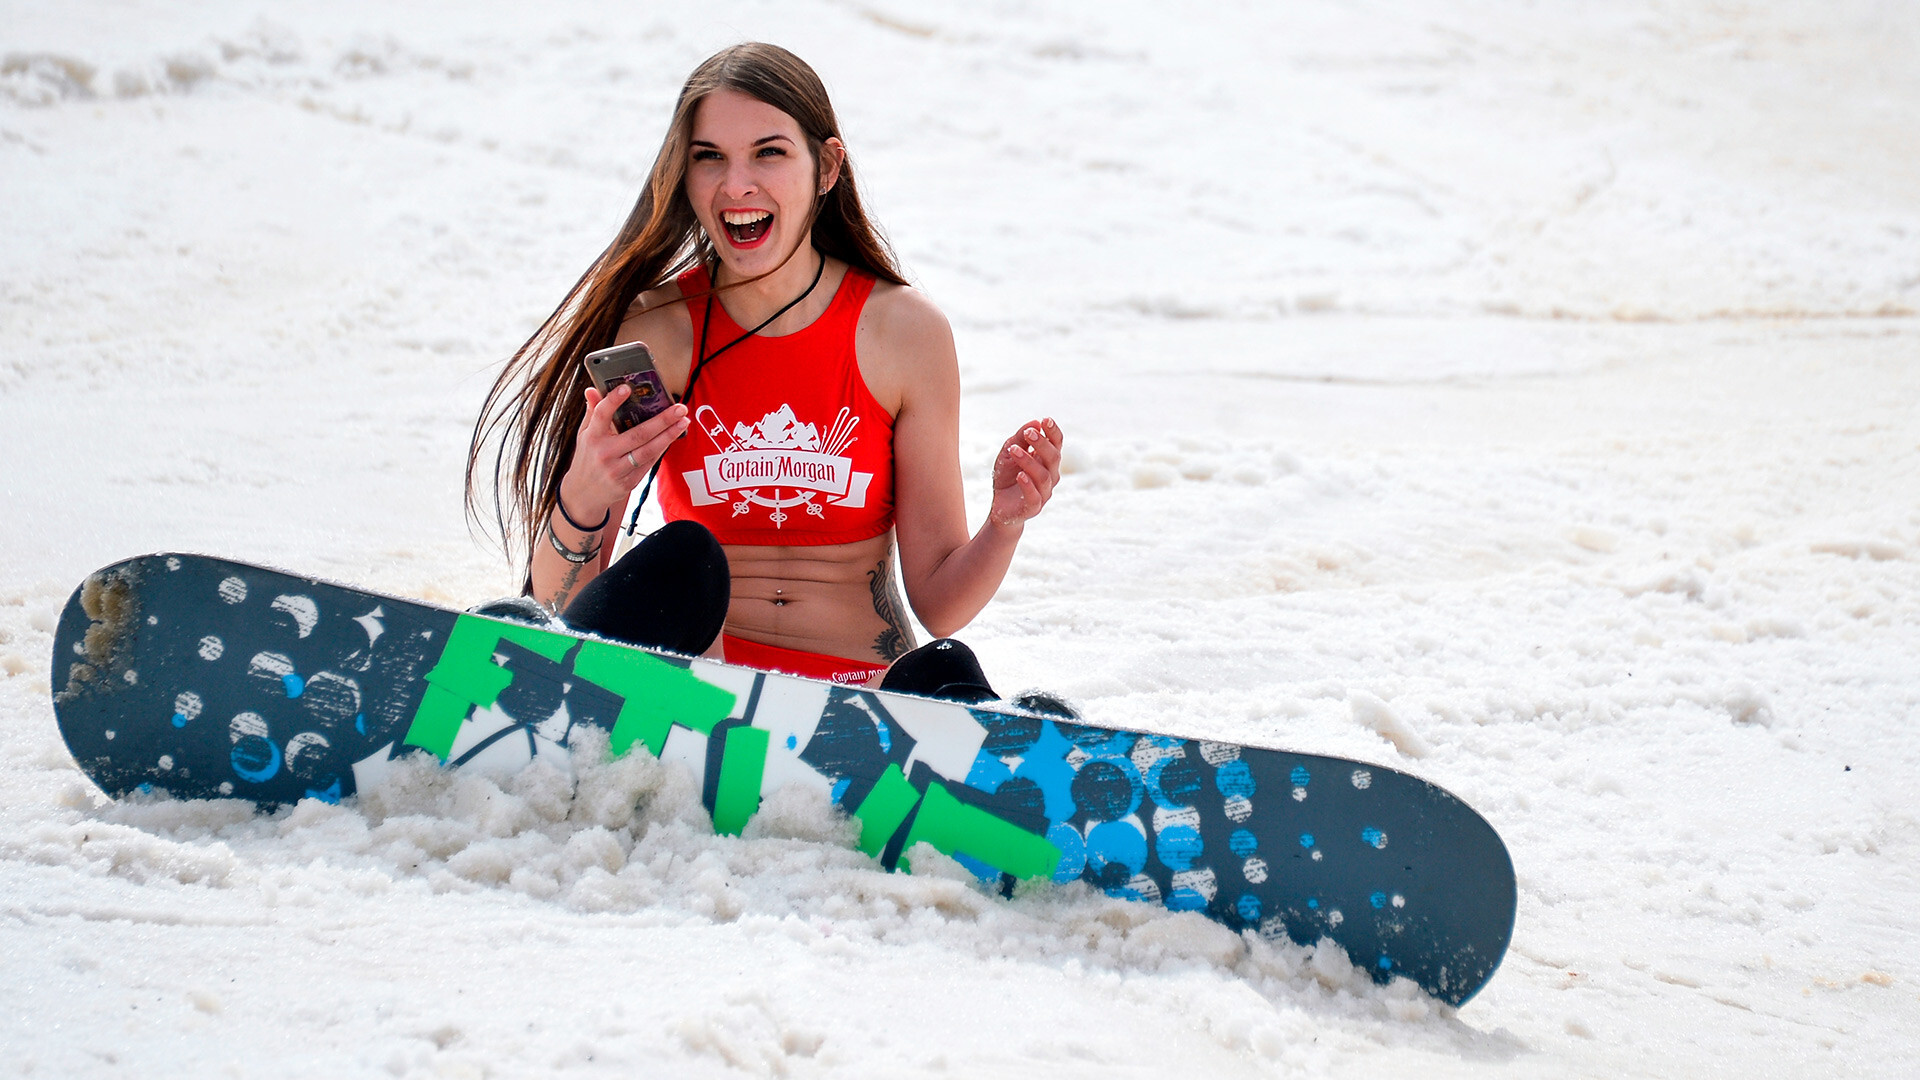 Spring bikini  snowboarding in Sochi